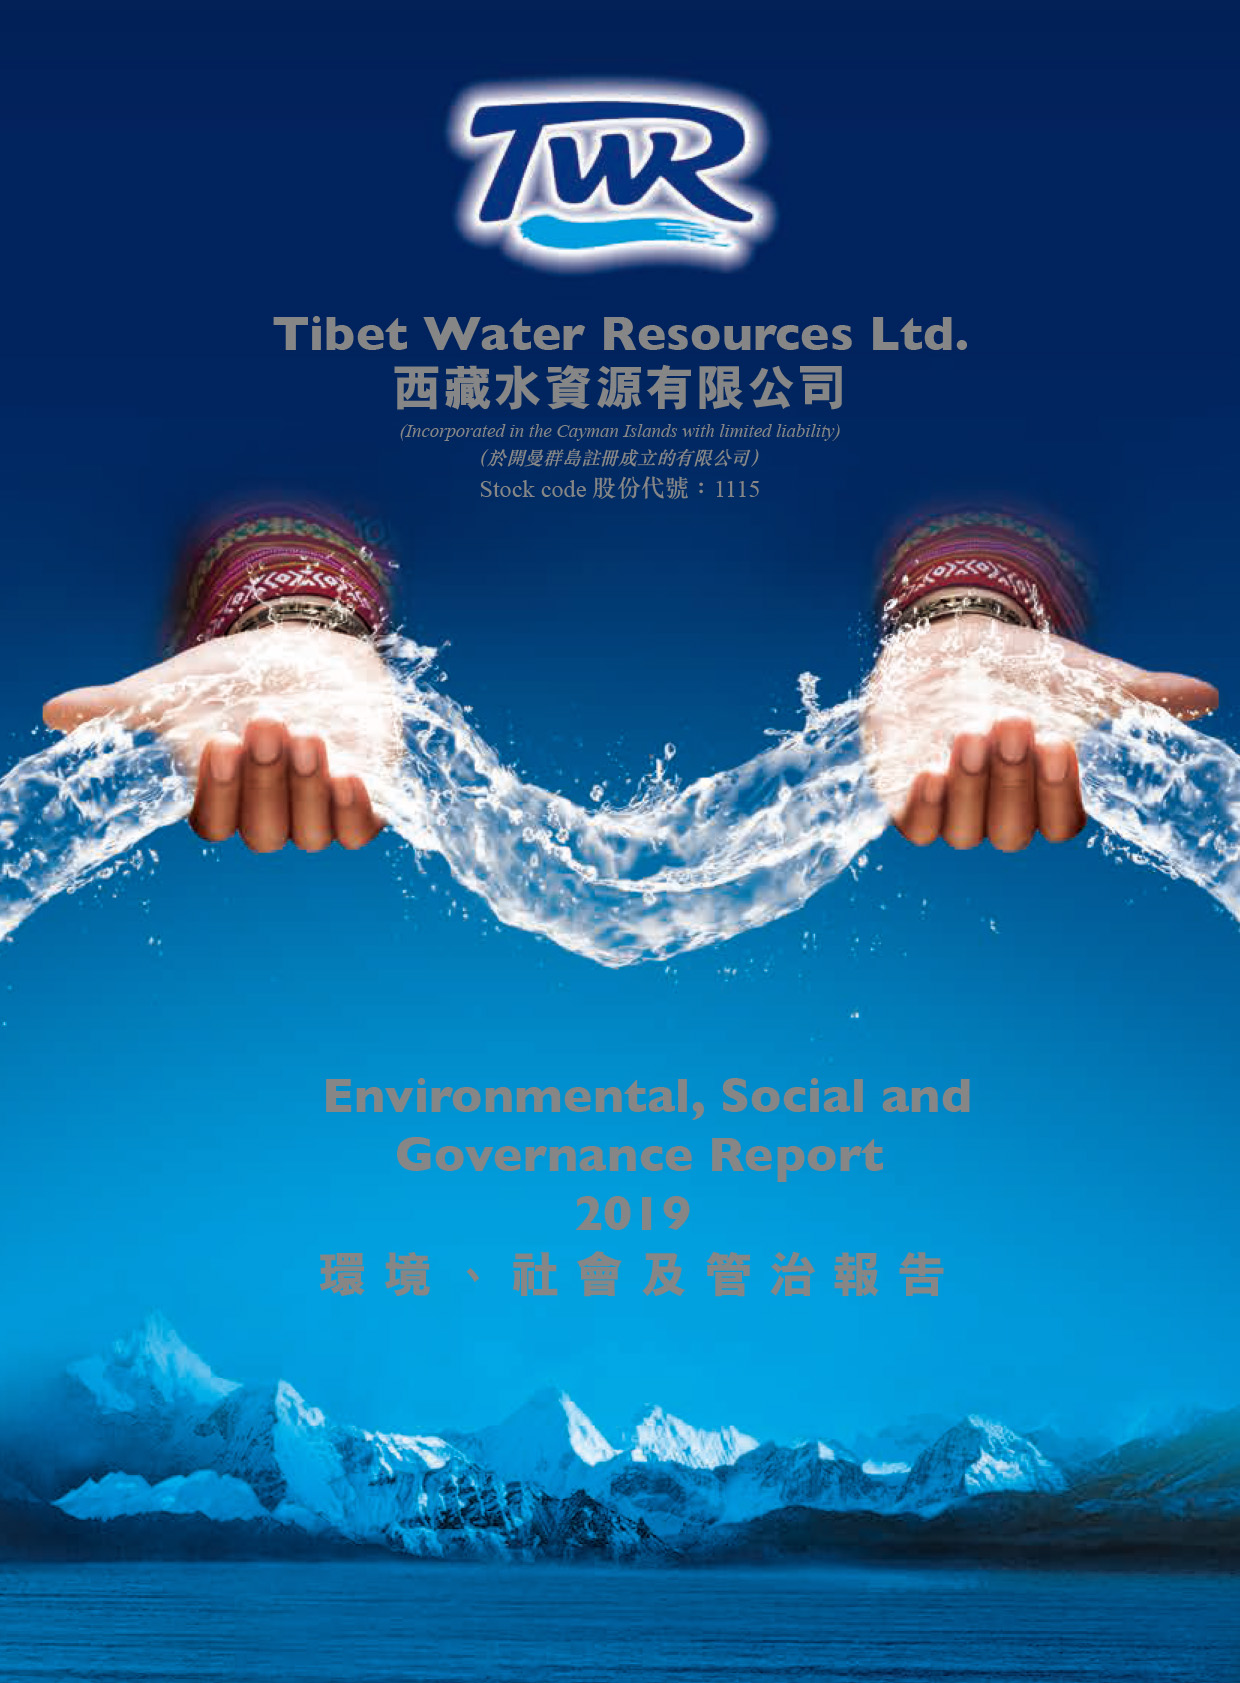 Tibet Water Resources Ltd. ESG